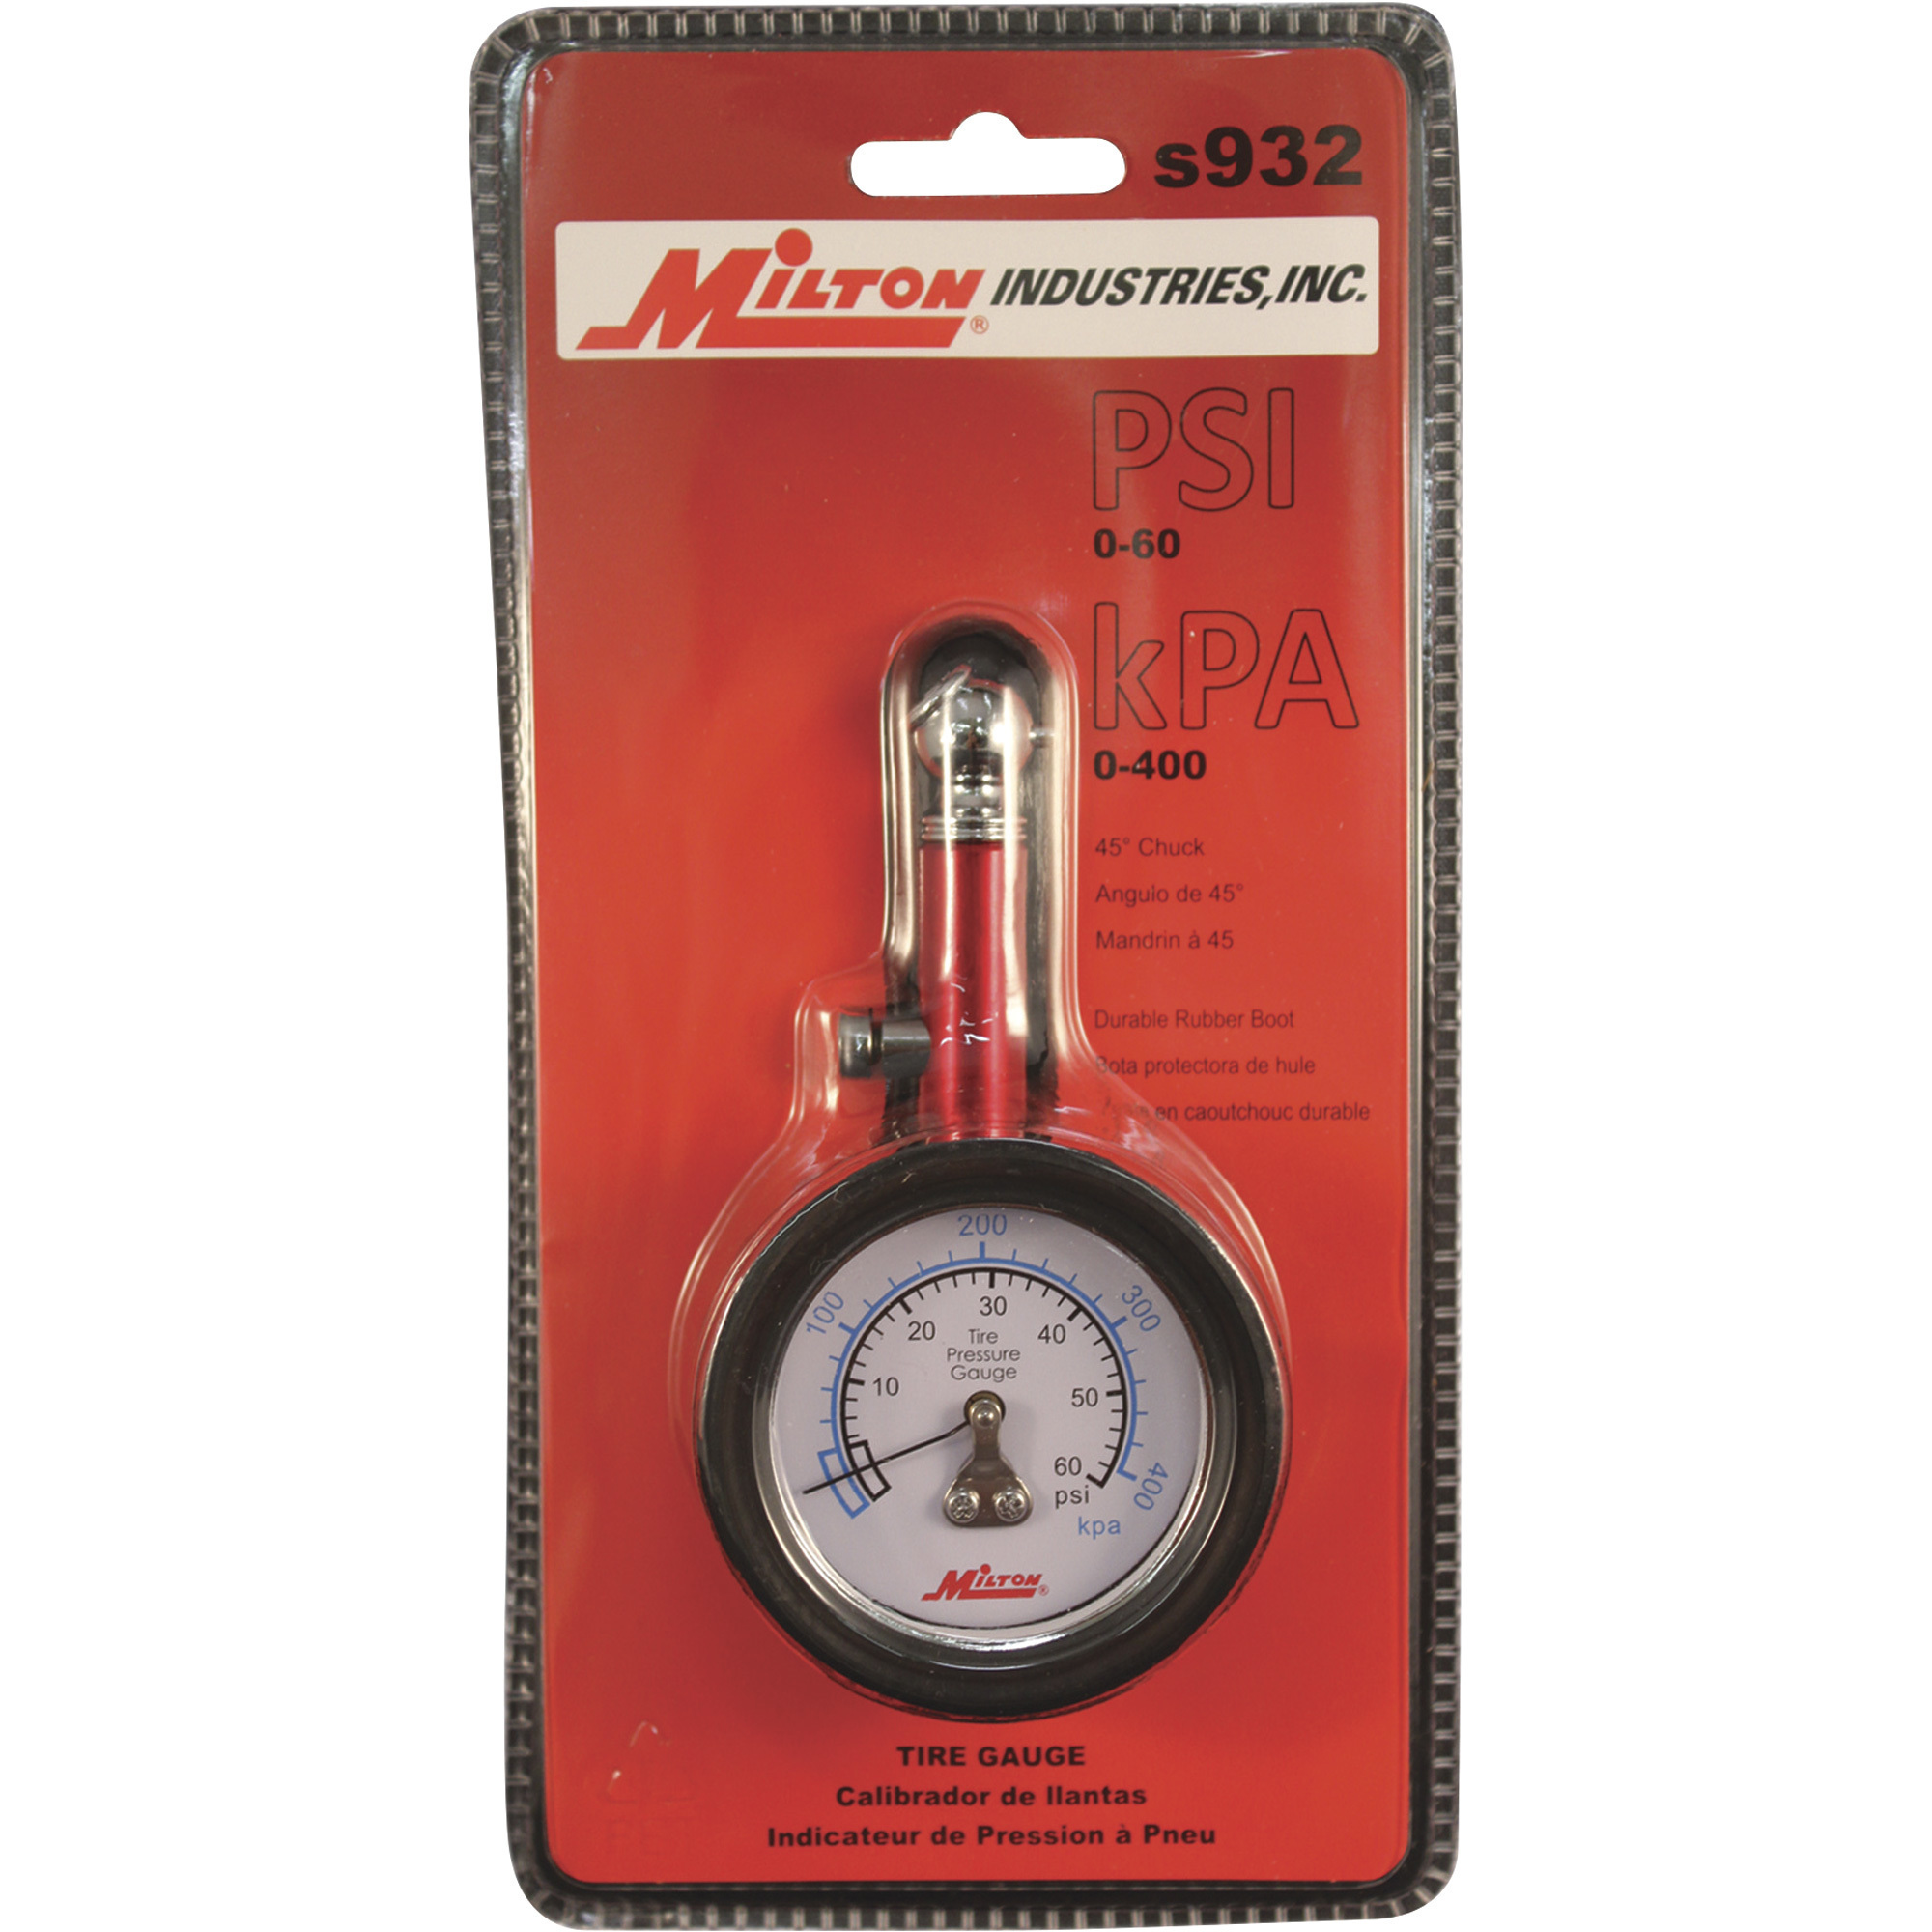 Milton Air Compressor Dial Tire Gauge, Model S-932